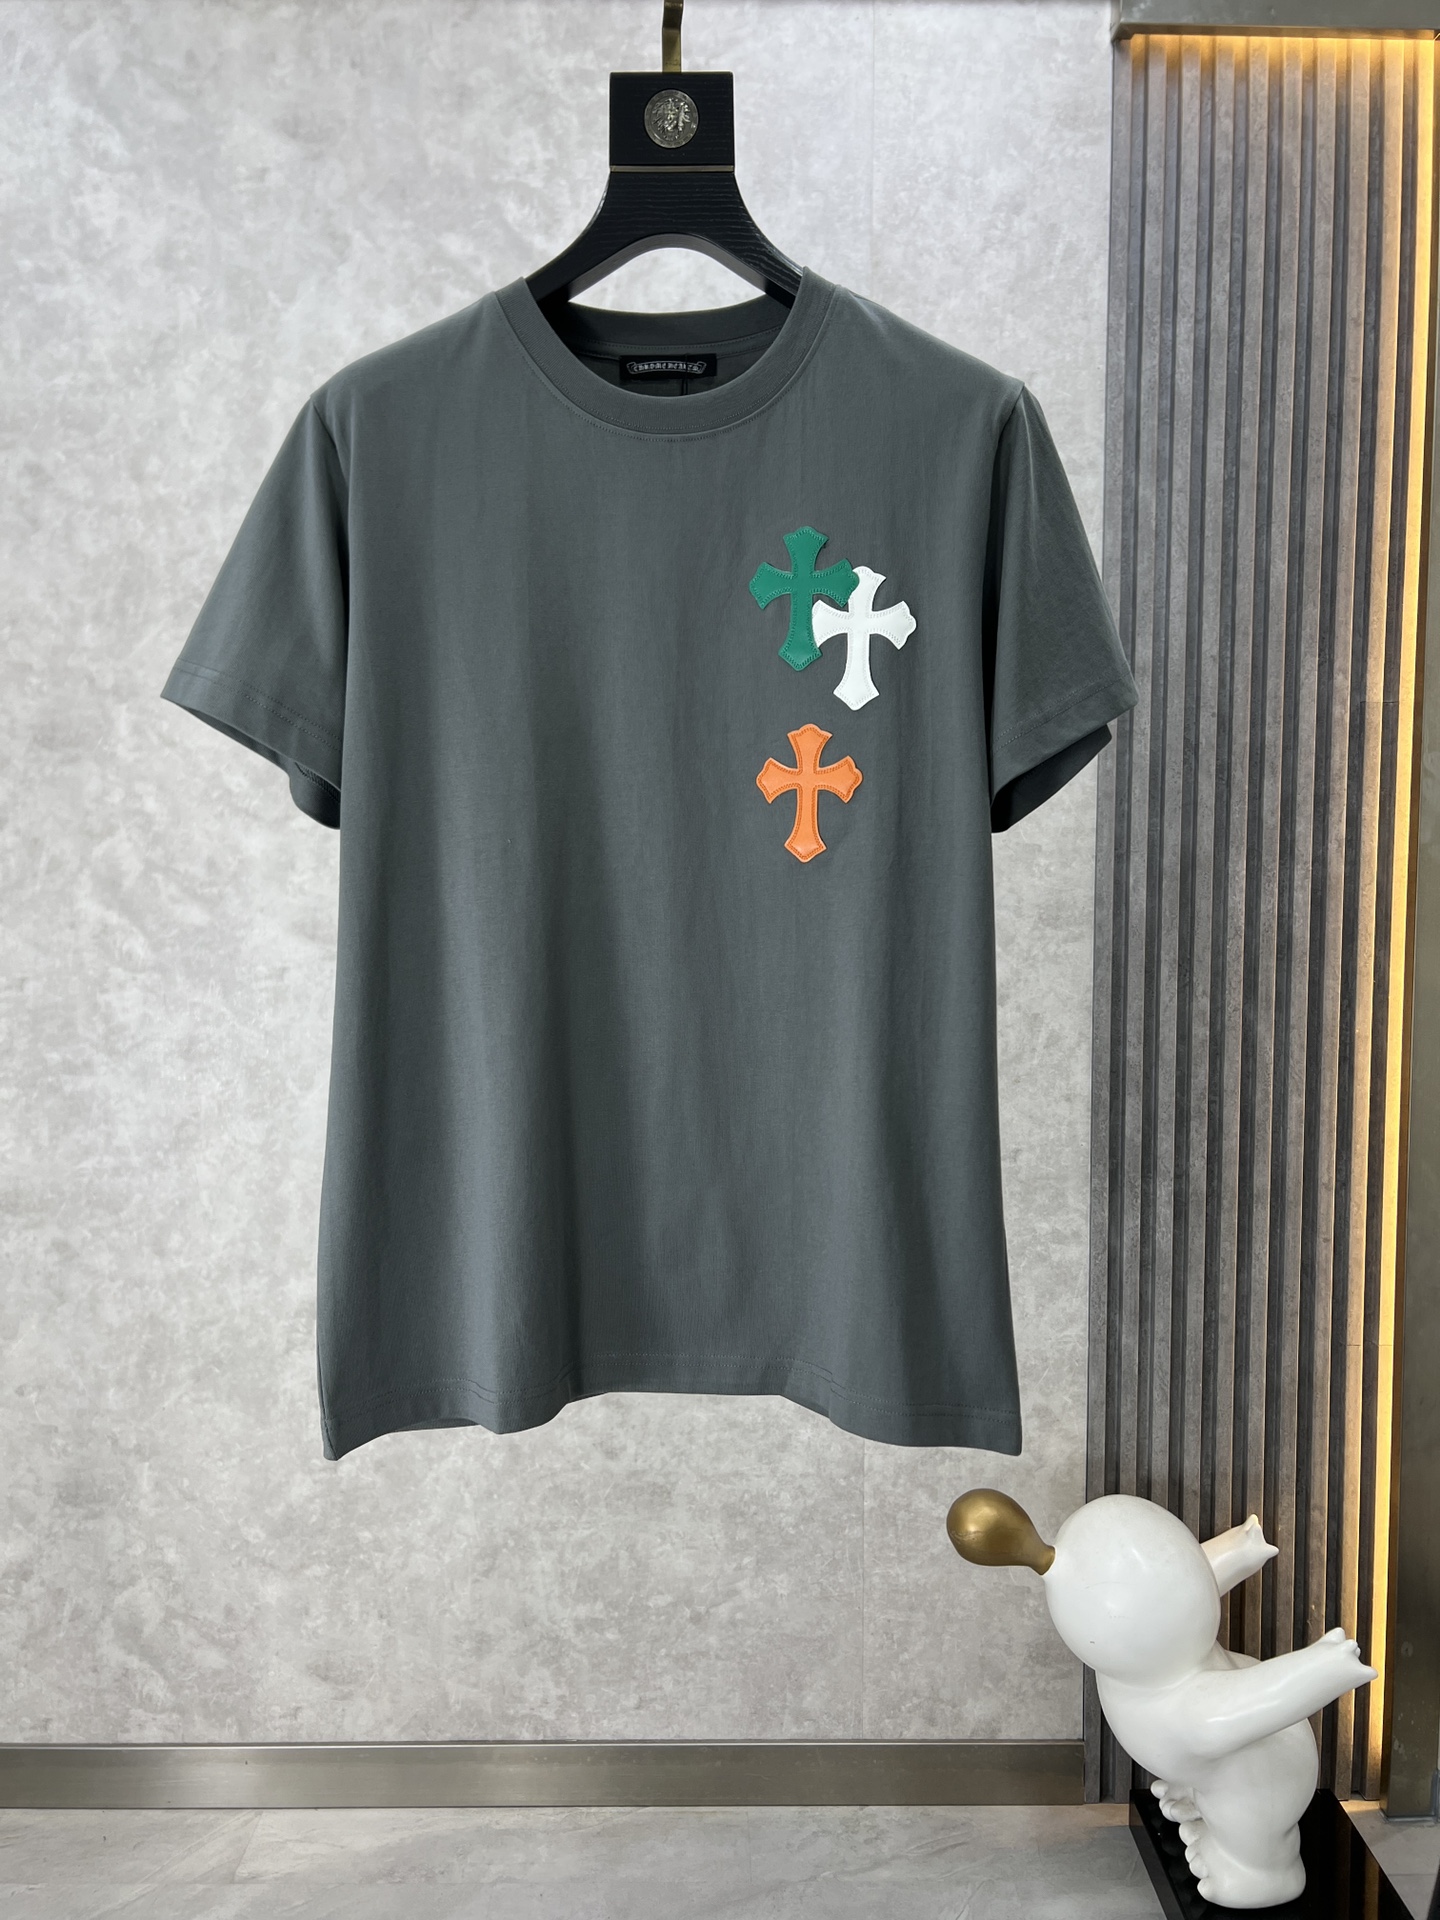 Chrome Hearts Clothing T-Shirt Short Sleeve